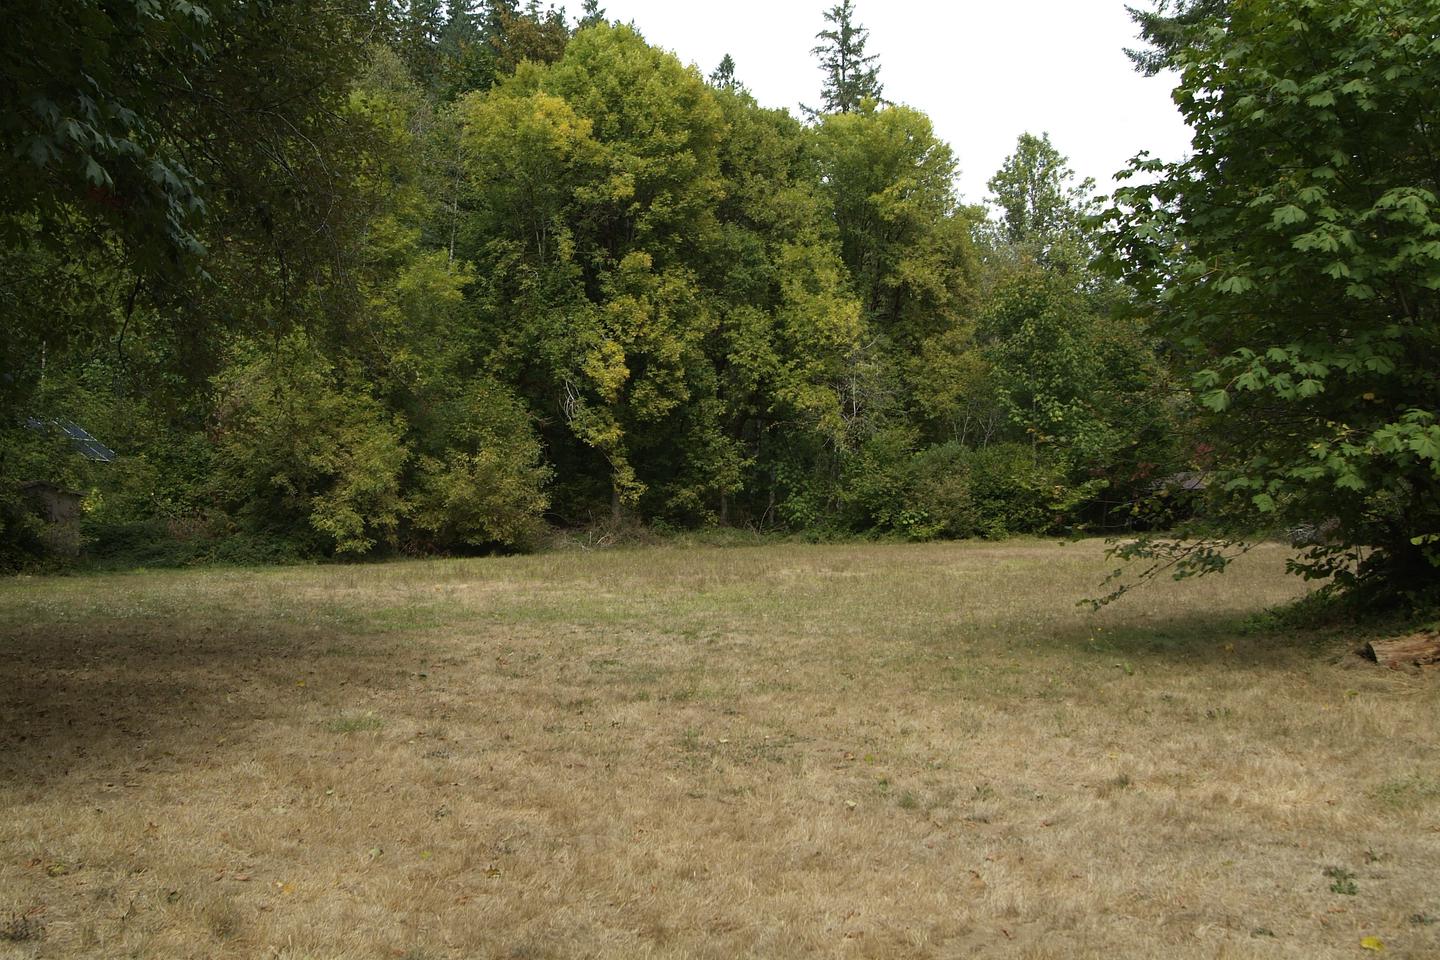 Field adjacent to shelter 1. 